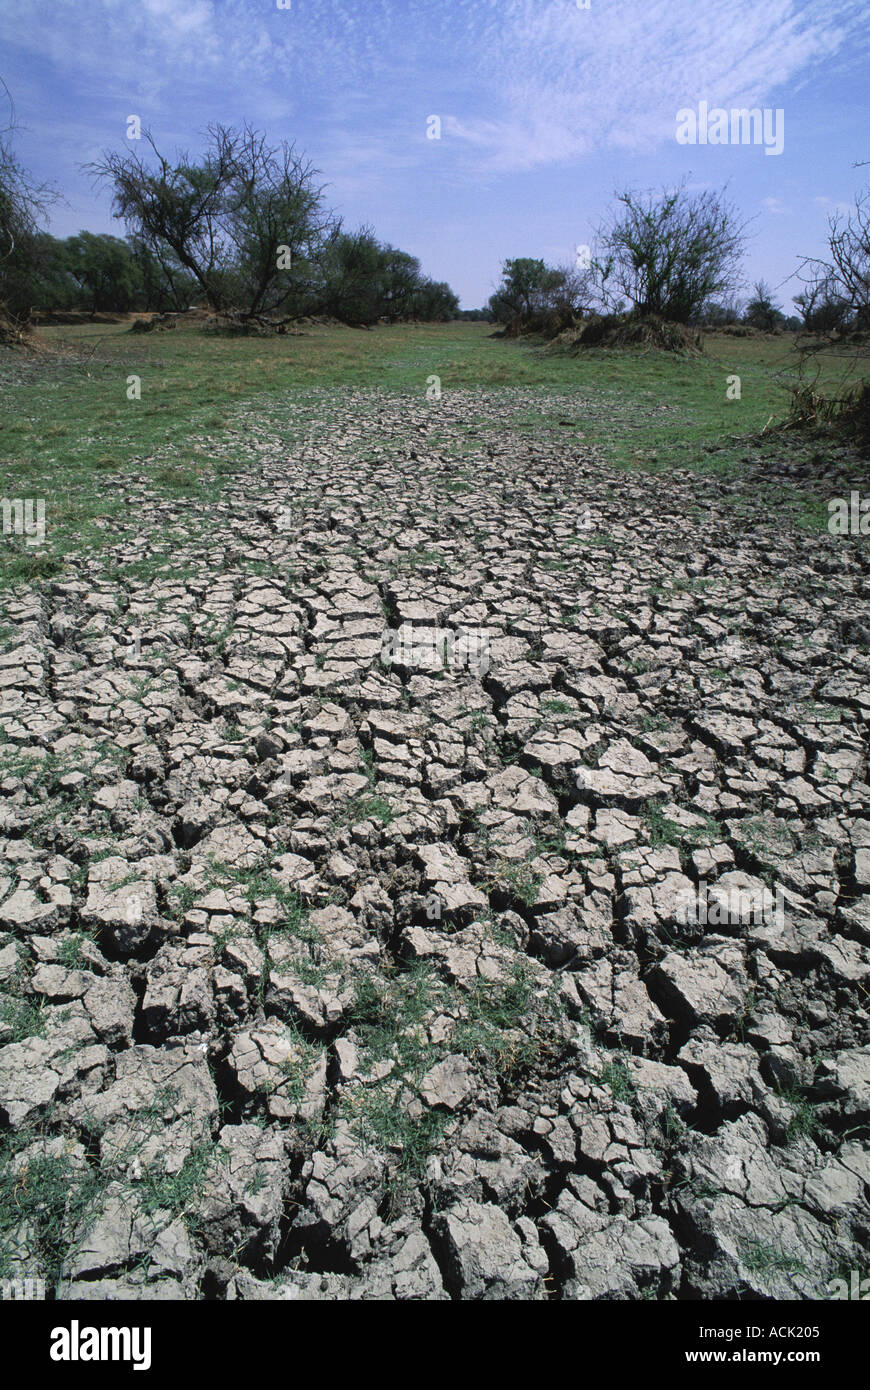 Rissige Erde während der schweren Dürre in Keolado Ghana NP Rajasthan Indien Stockfoto